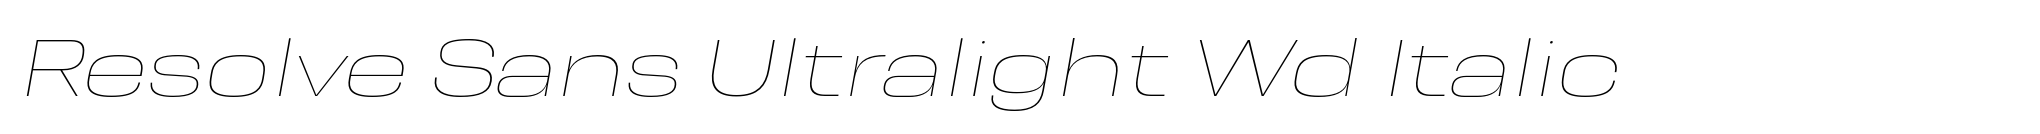 Resolve Sans Ultralight Wd Italic image